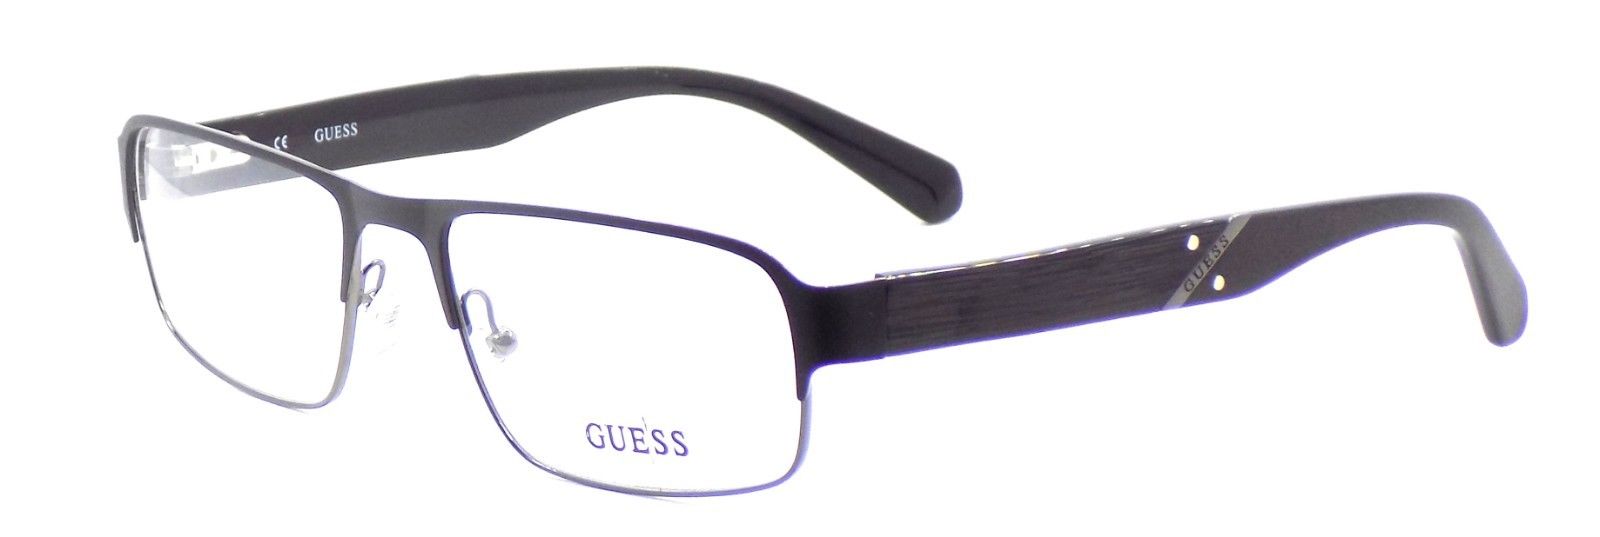 1-GUESS GU1836 BLK Unisex Eyeglasses Frames Metal 54-18-135 Satin Black + CASE-715583292932-IKSpecs